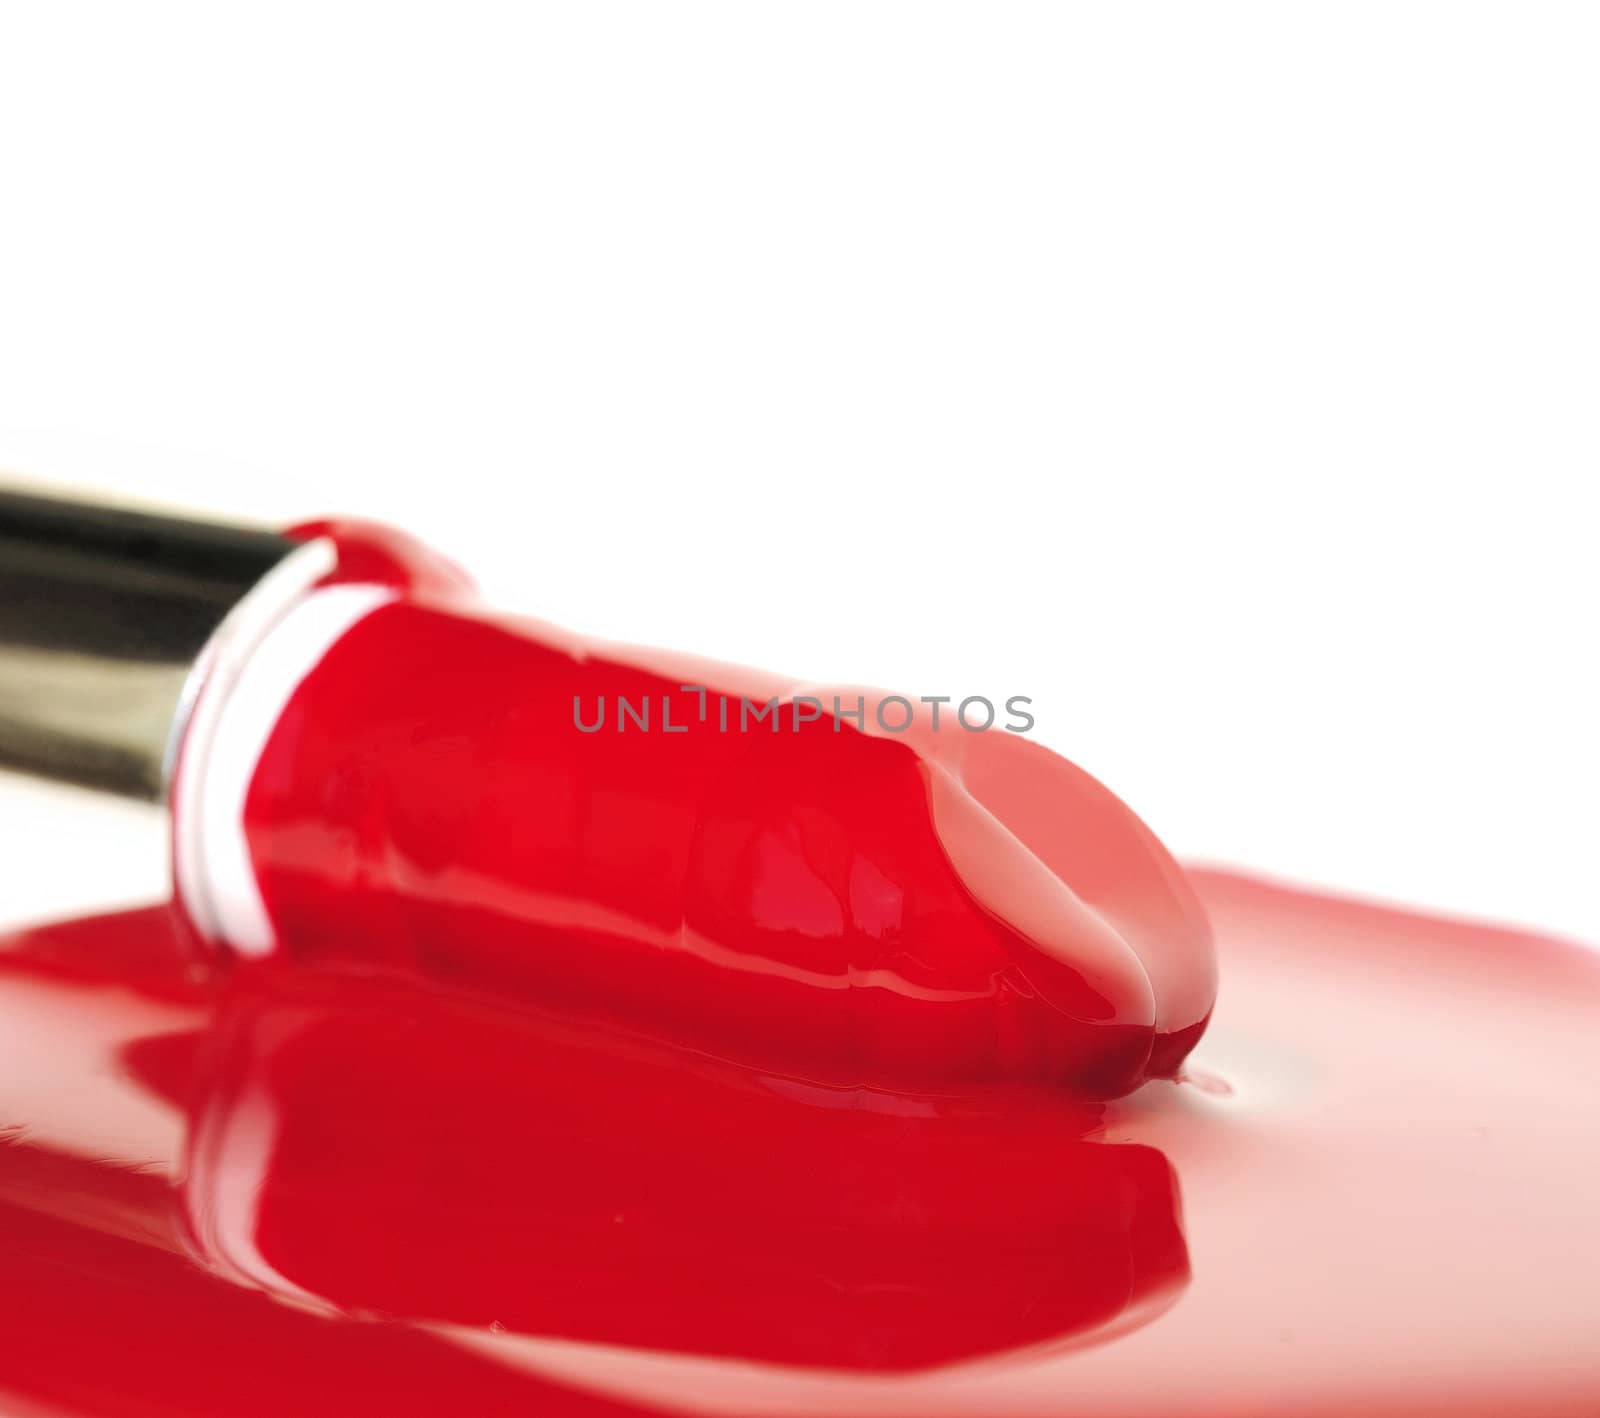 Lipsticks on red liquid . by POMACHKA